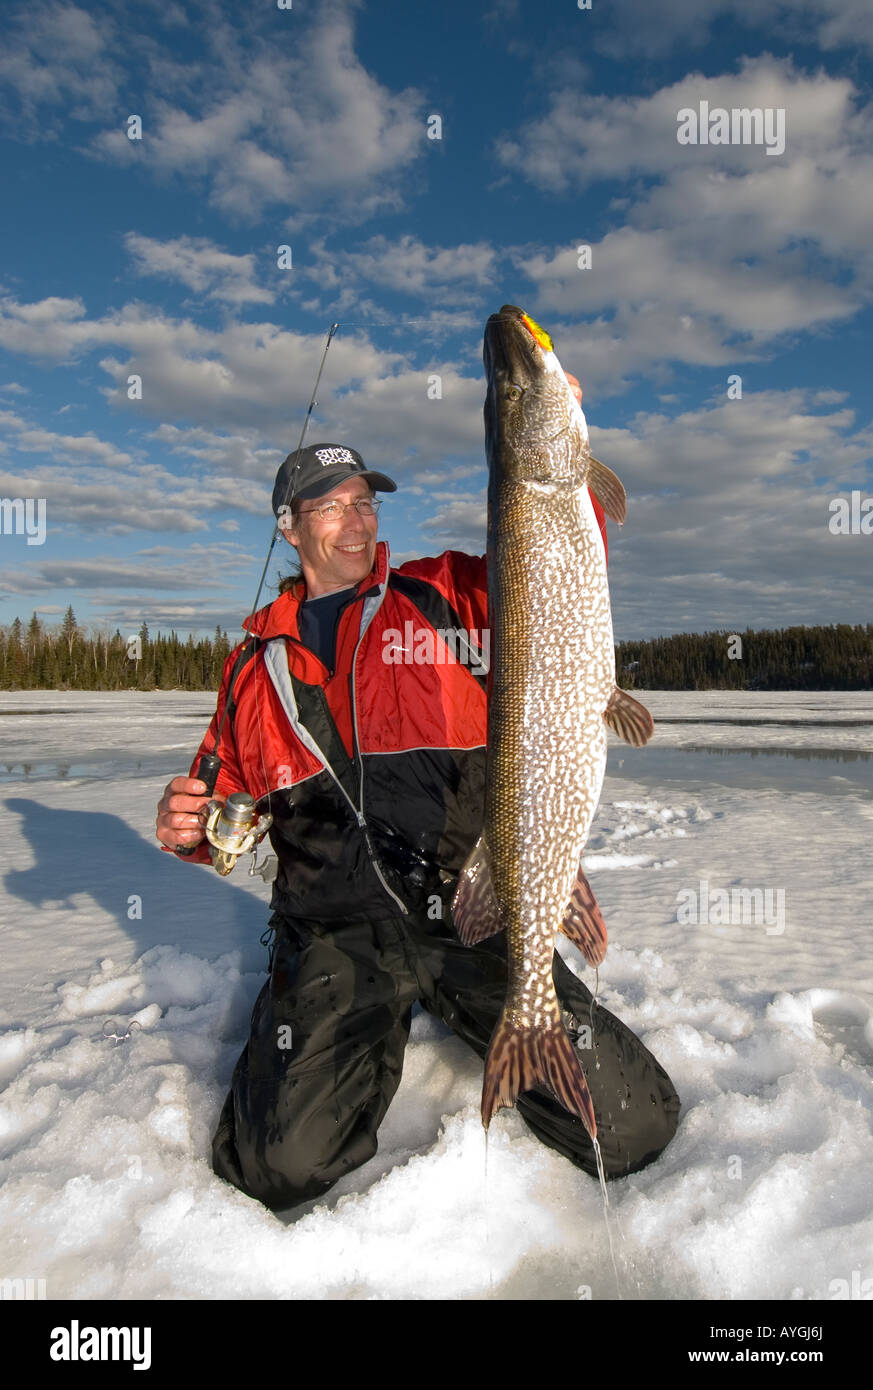 Northern pike ice fishing Stock Photos, Royalty Free Northern pike